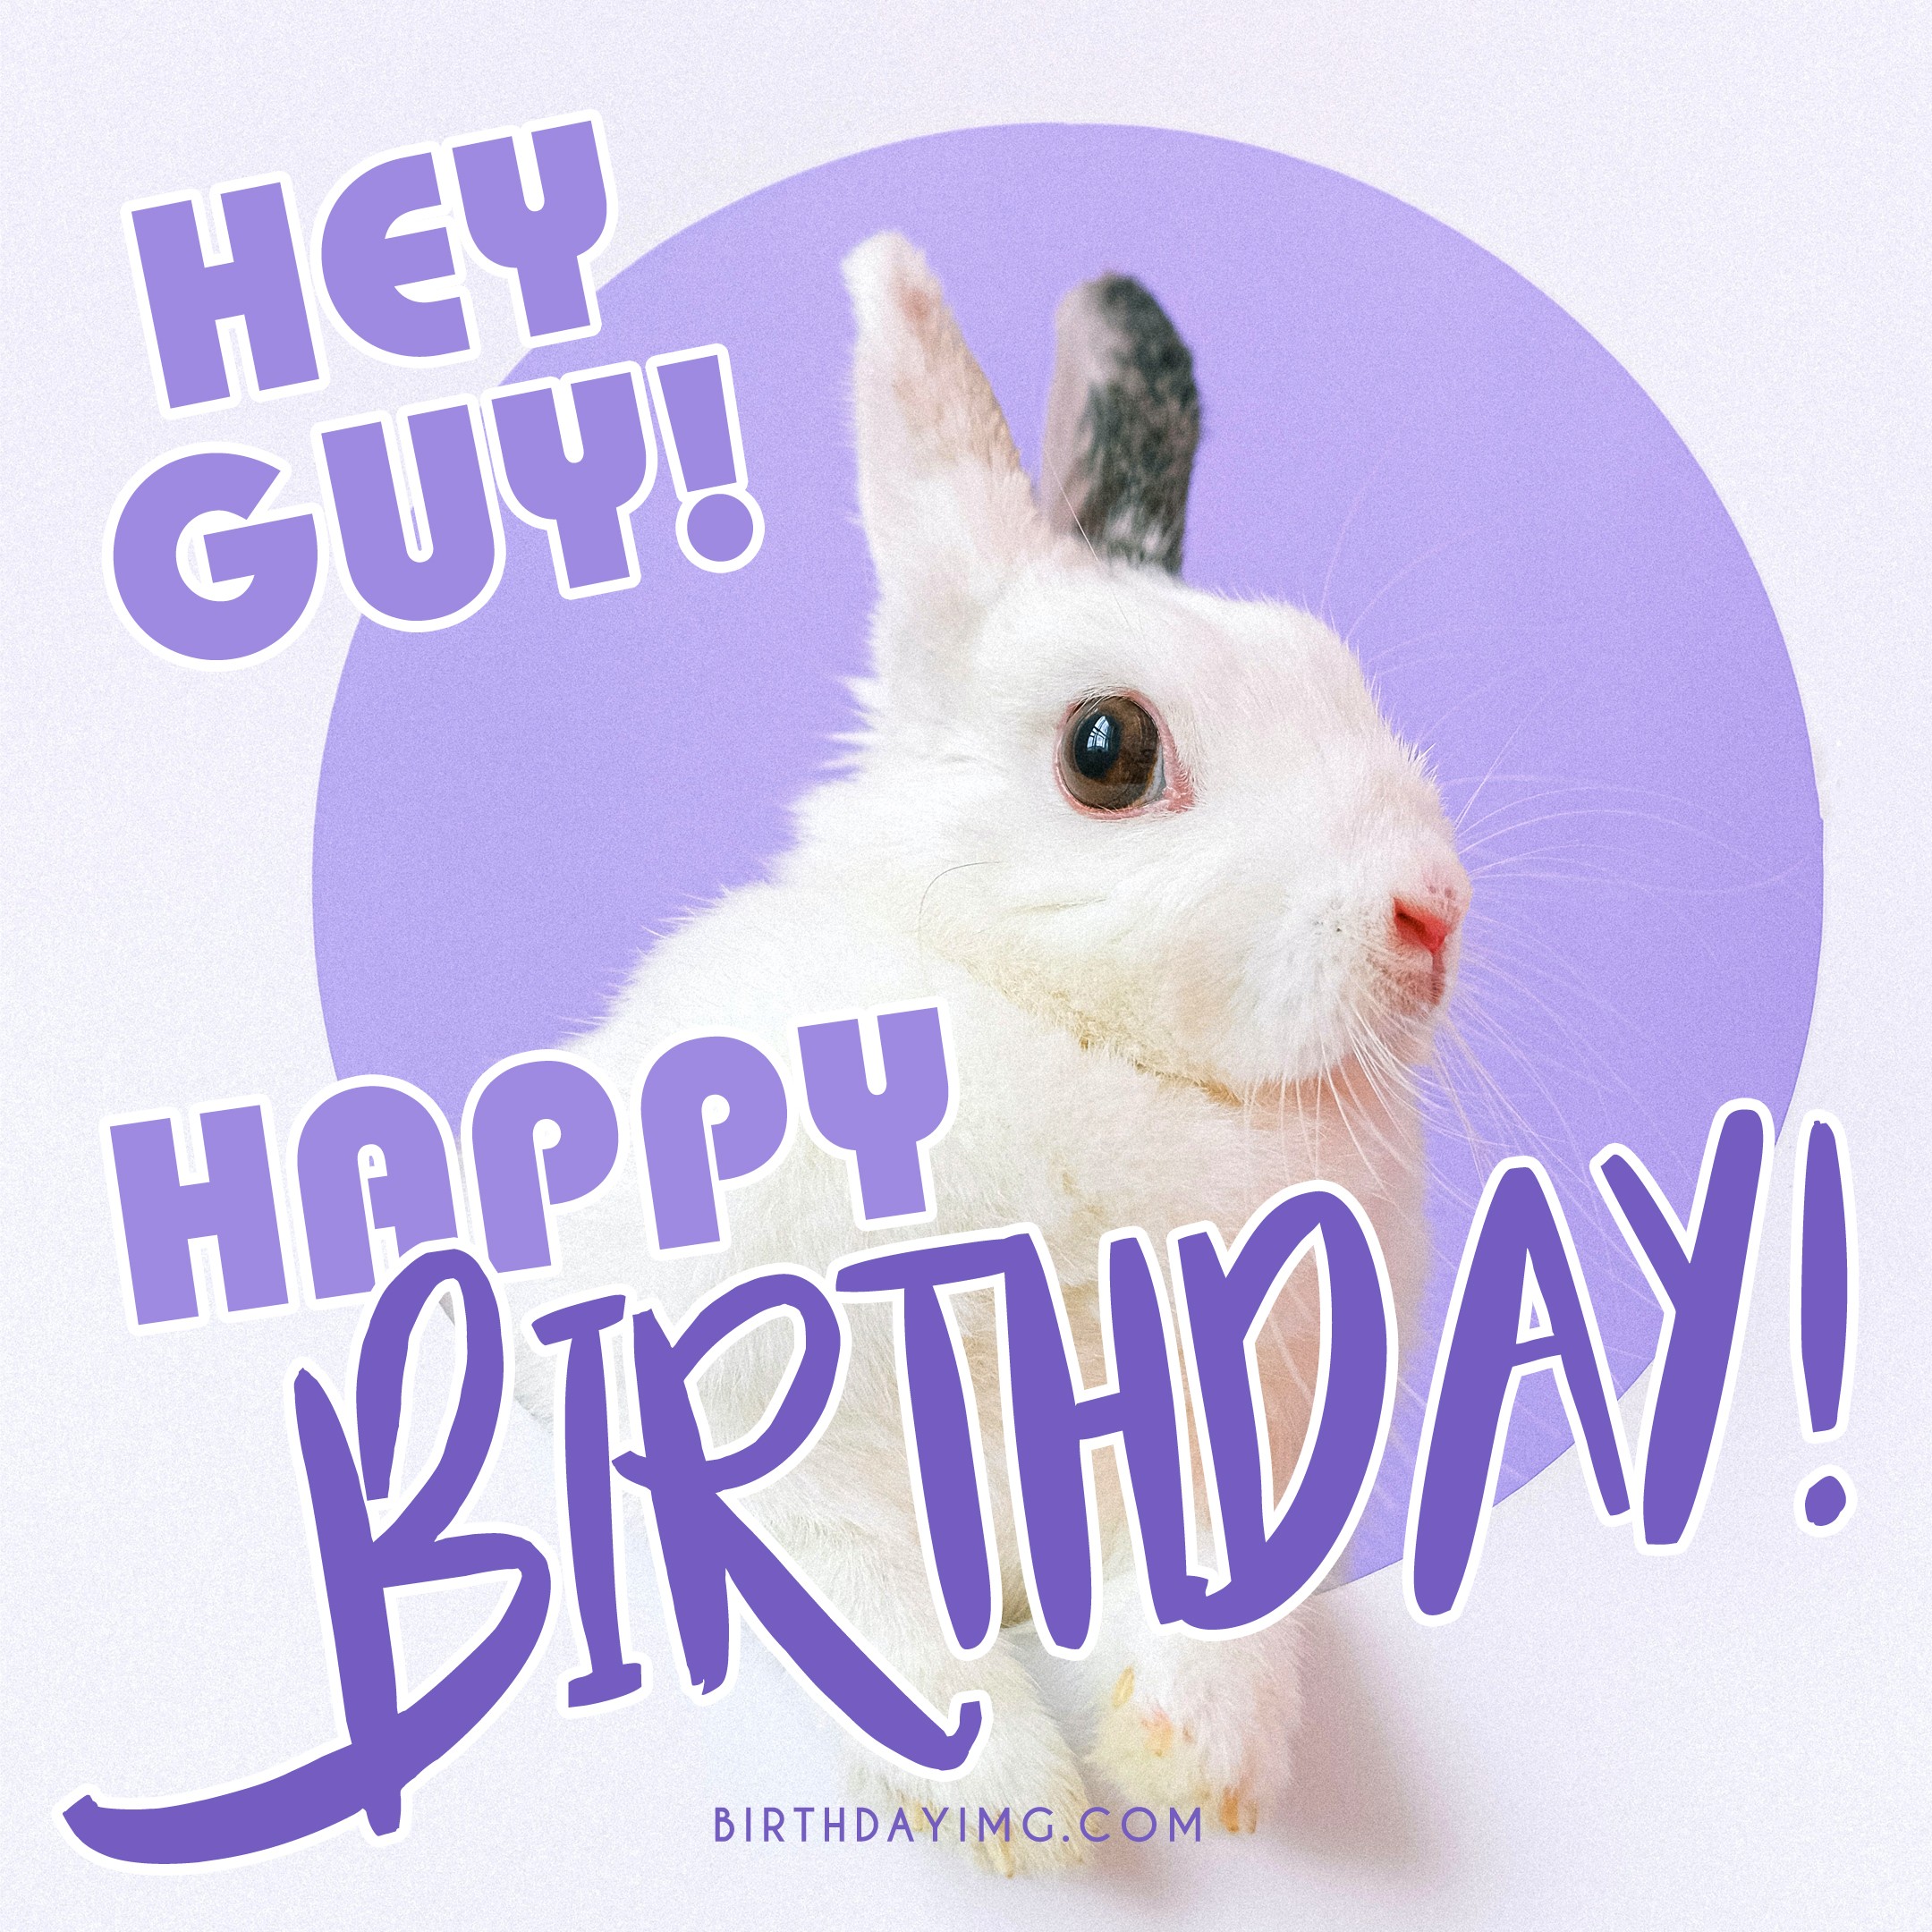 Free Funny Rabbit Happy Birthday Image 